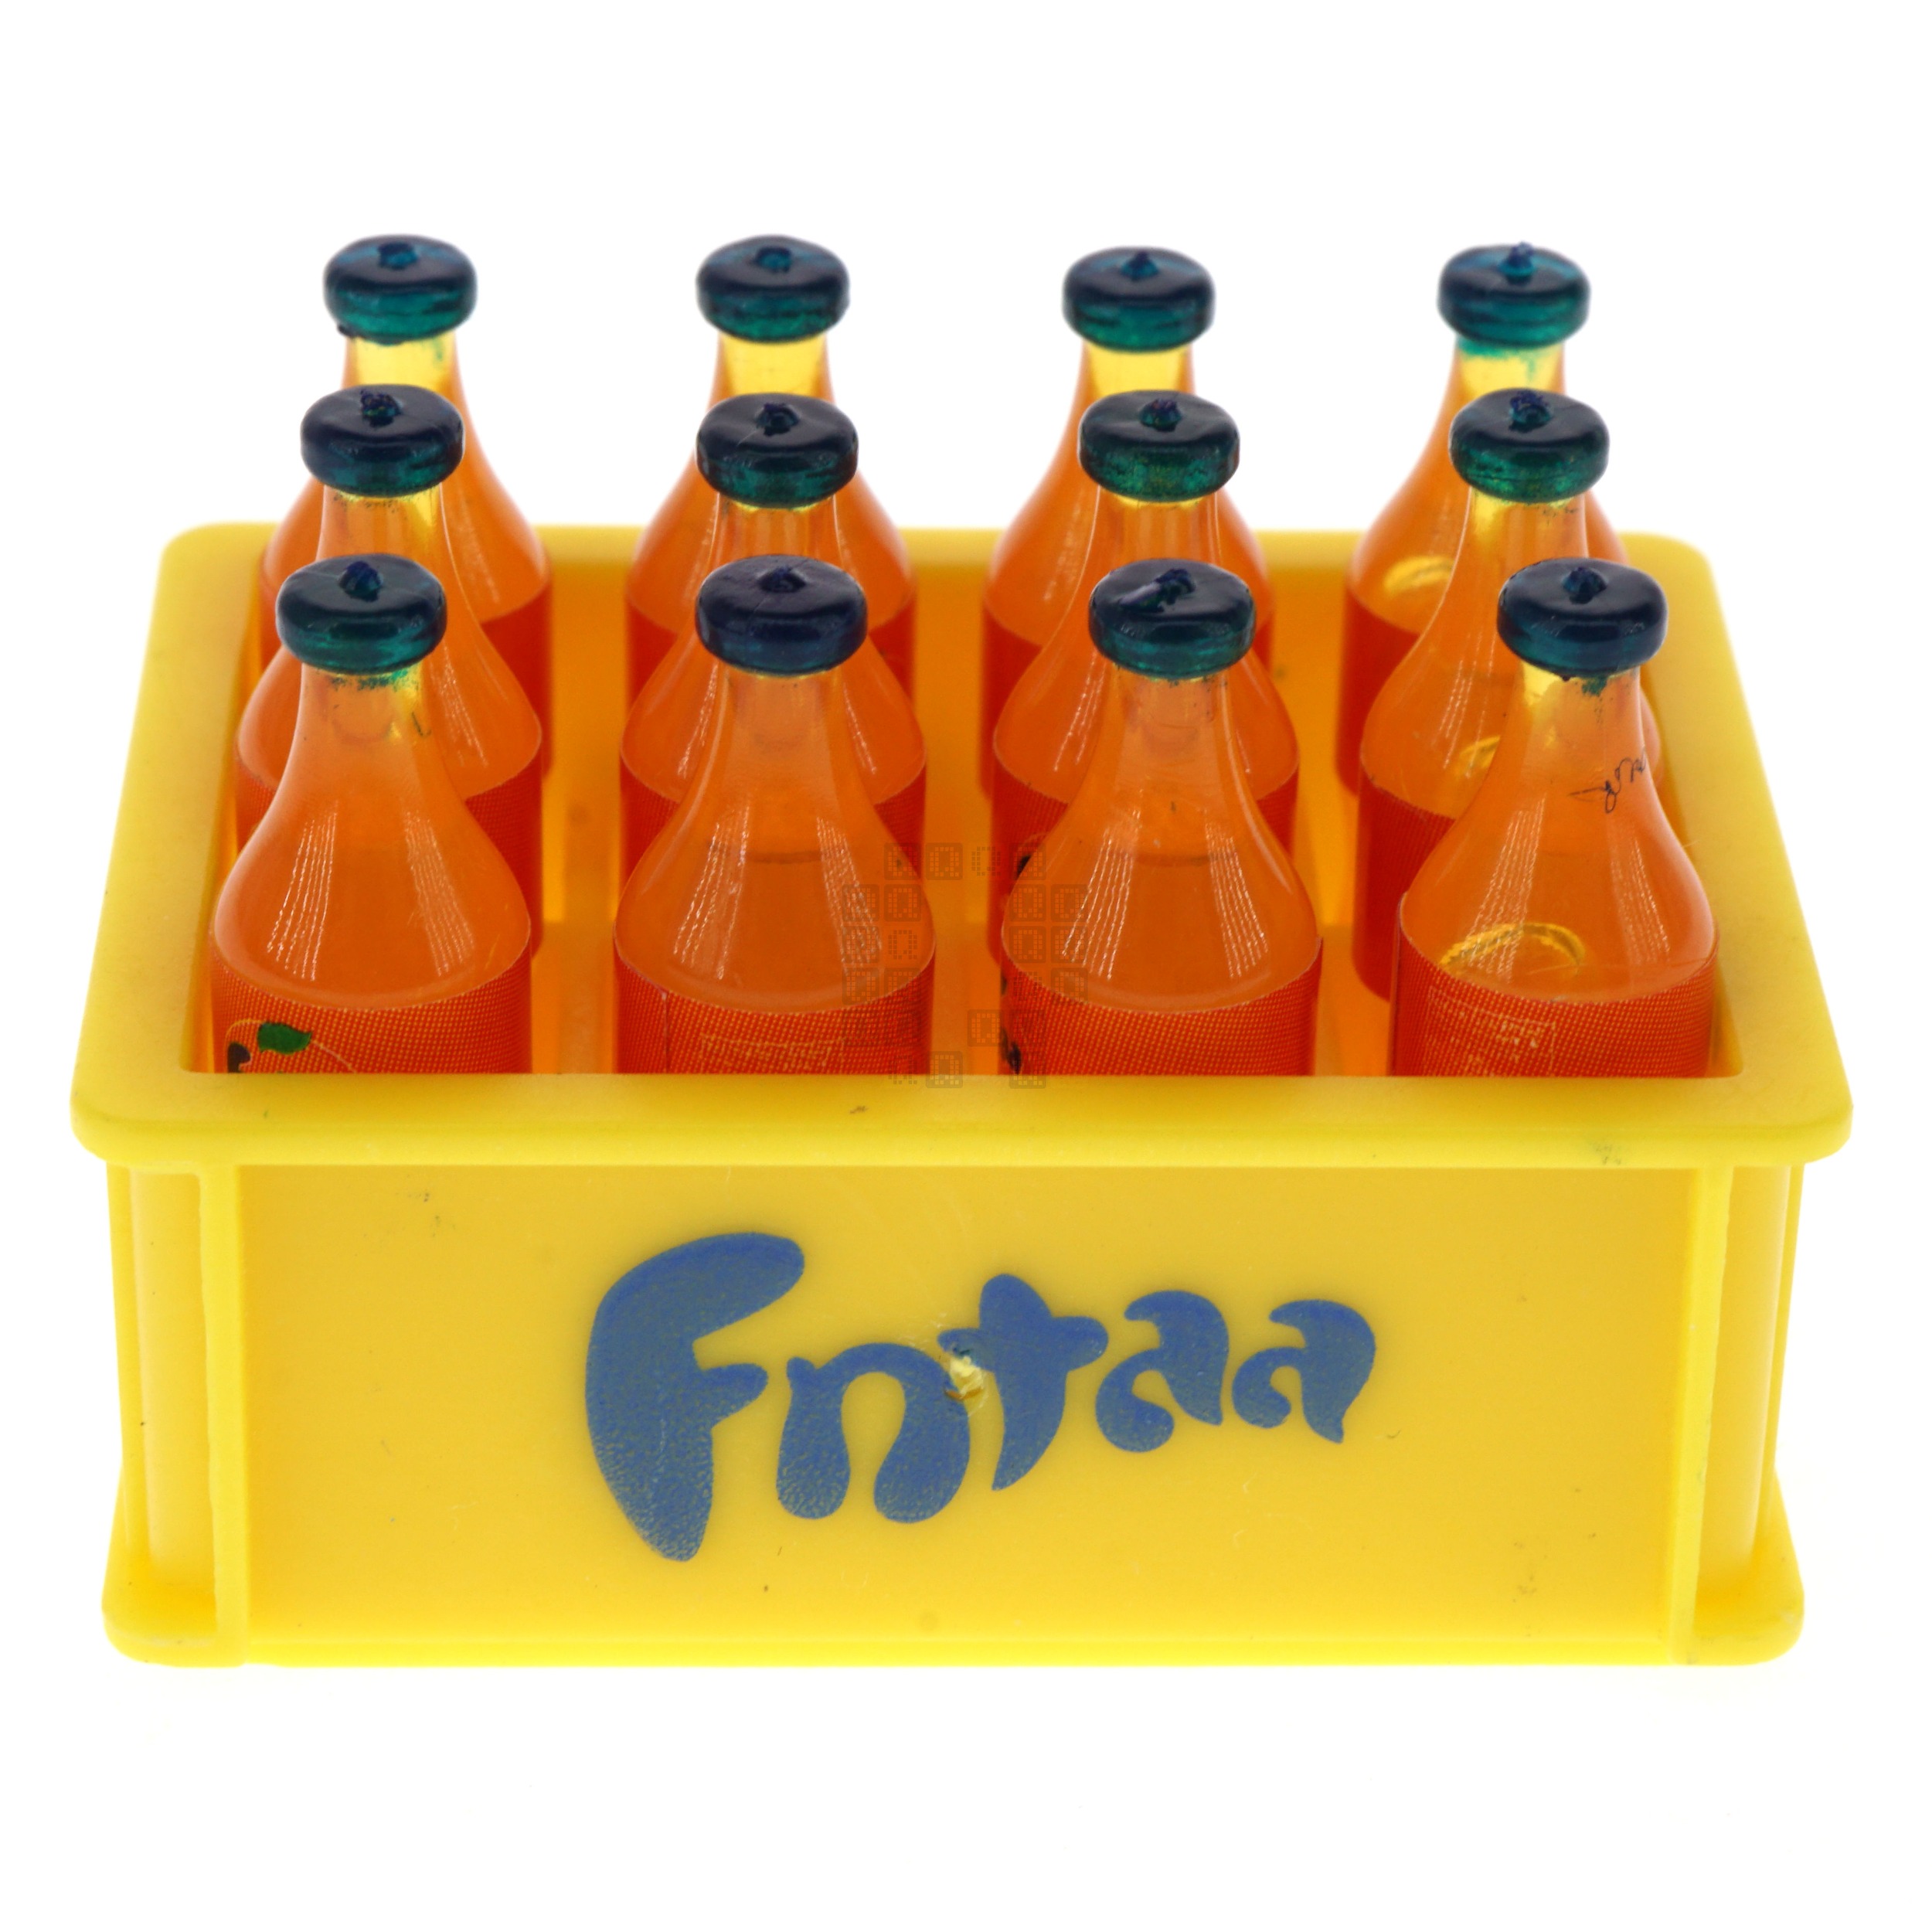 1:12 Scale, 12 Miniature Fntaa 'Glass' Soda Bottles in Plastic Carrying Case